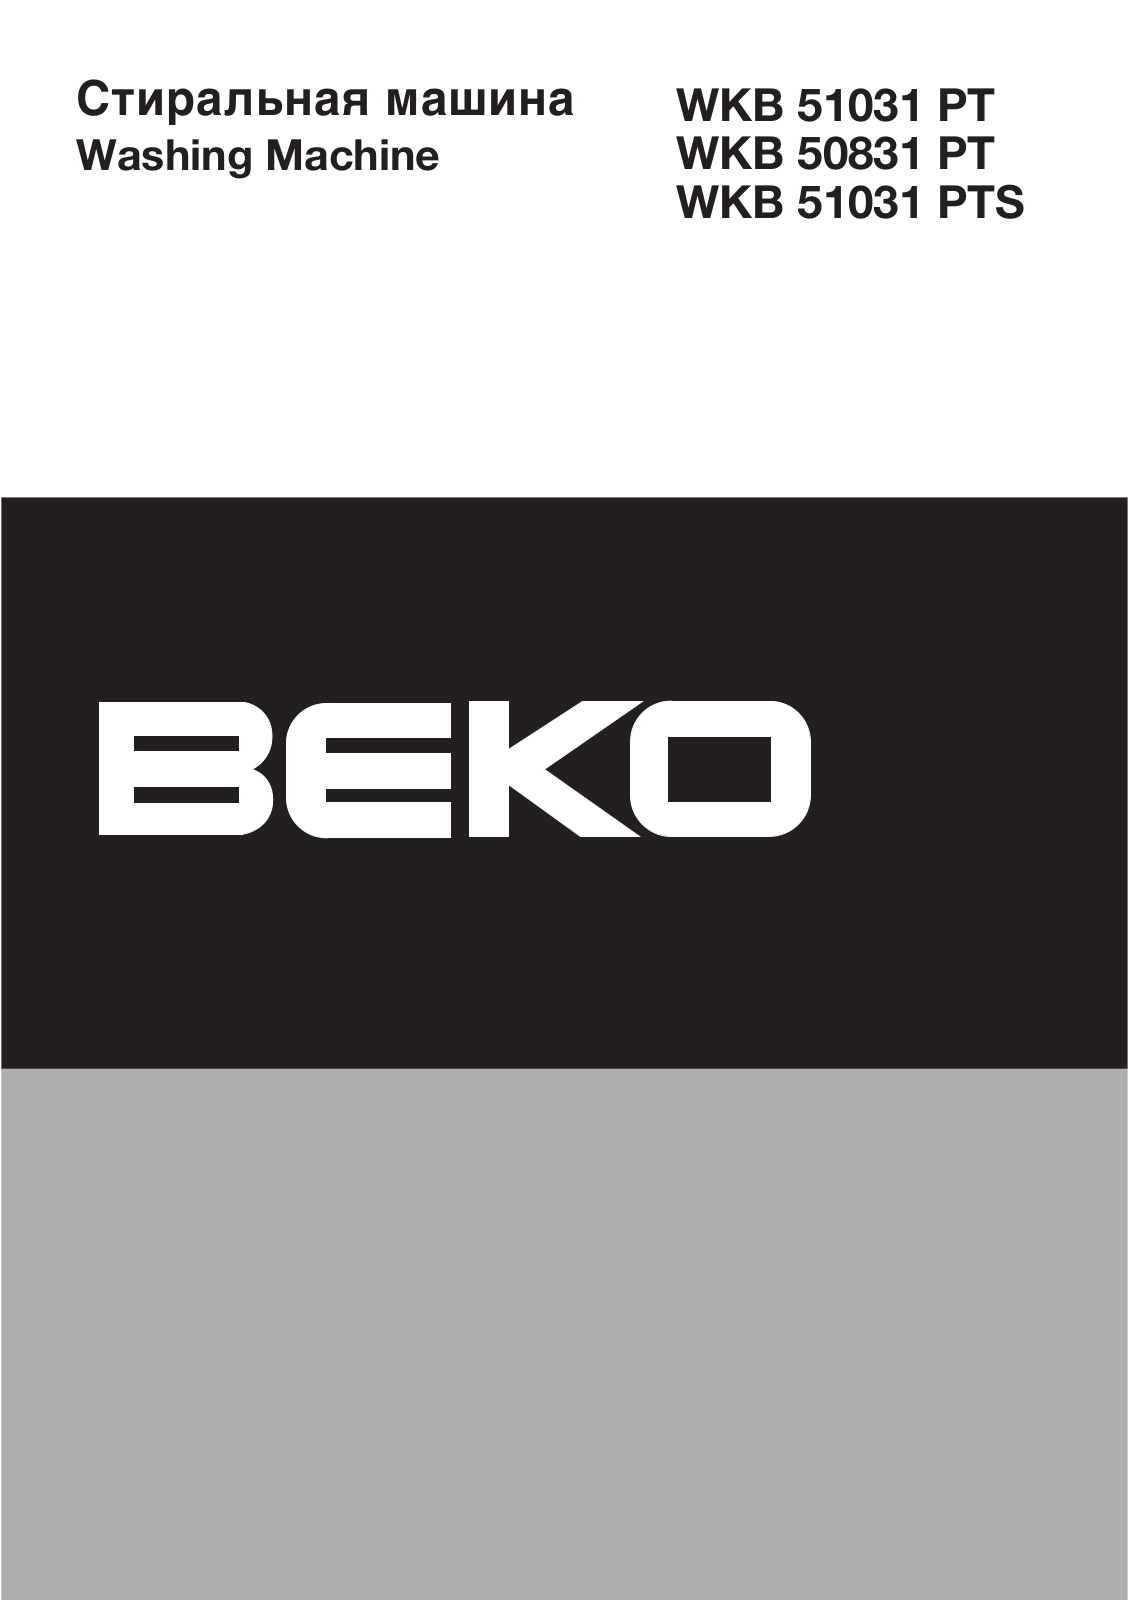 Beko WKB 51031 PTS, WKB 50831 PT, WKB 51031 PT User Manual